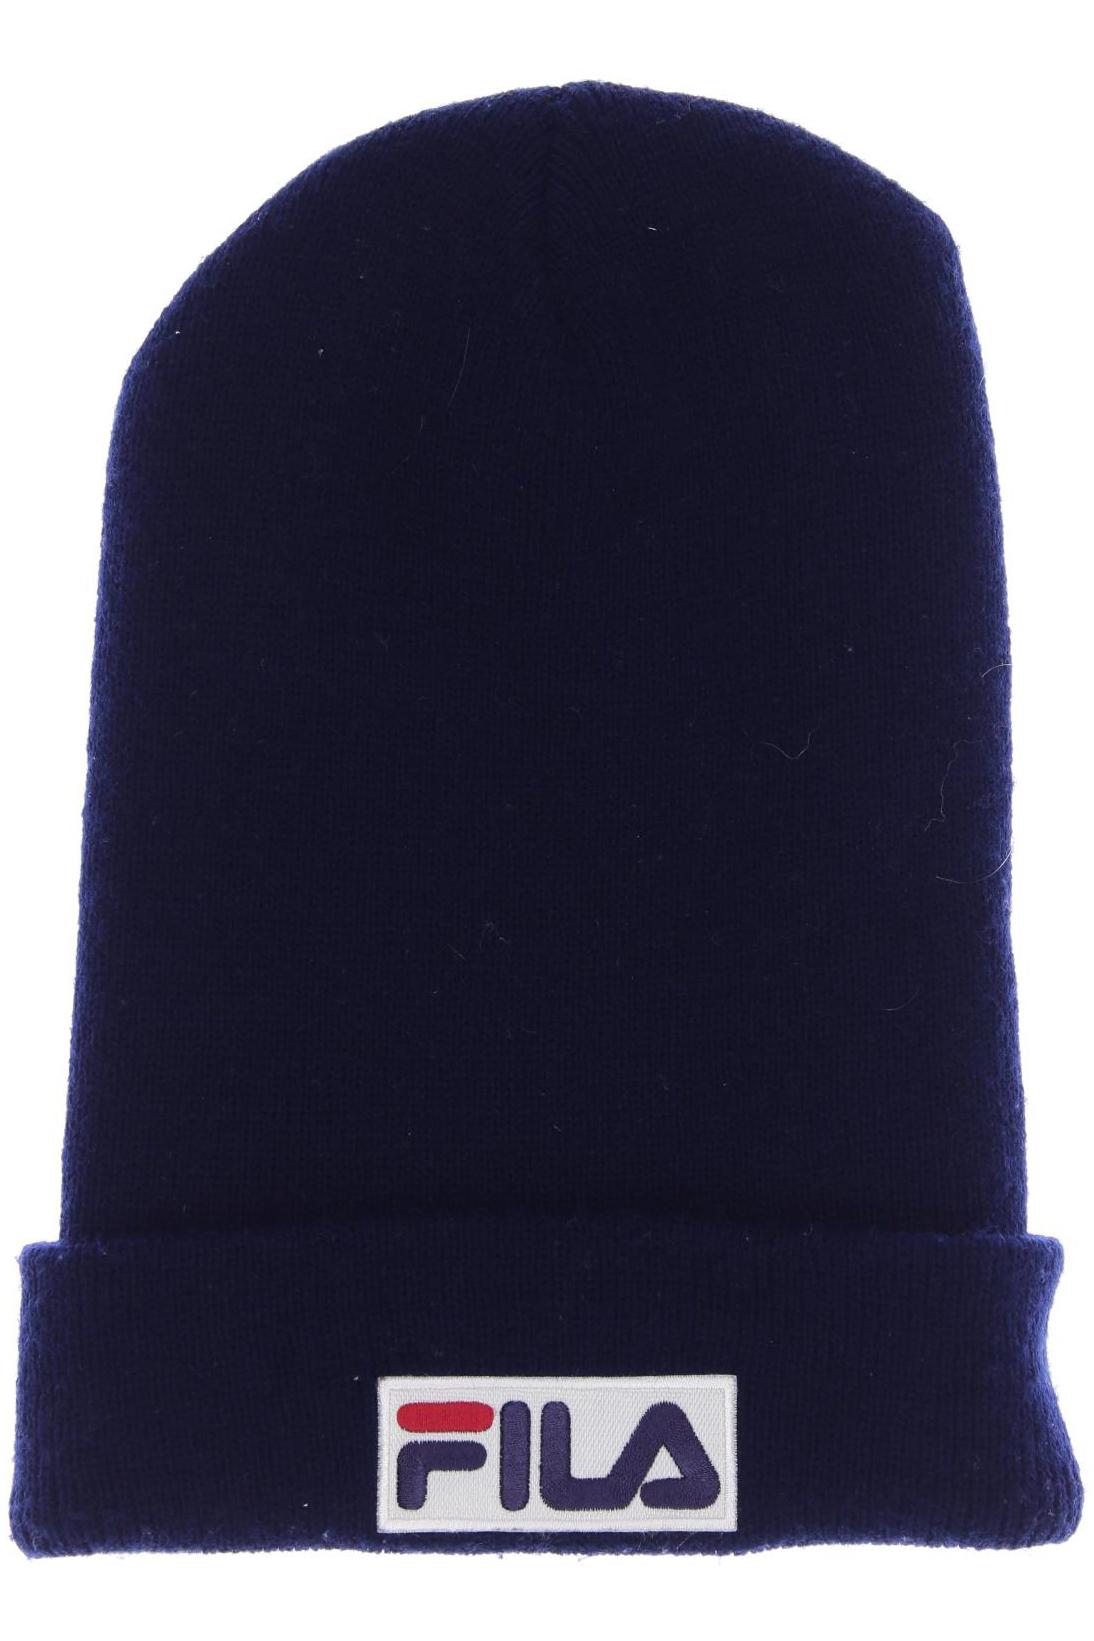 Fila Damen Hut/Mütze, marineblau, Gr. uni von Fila